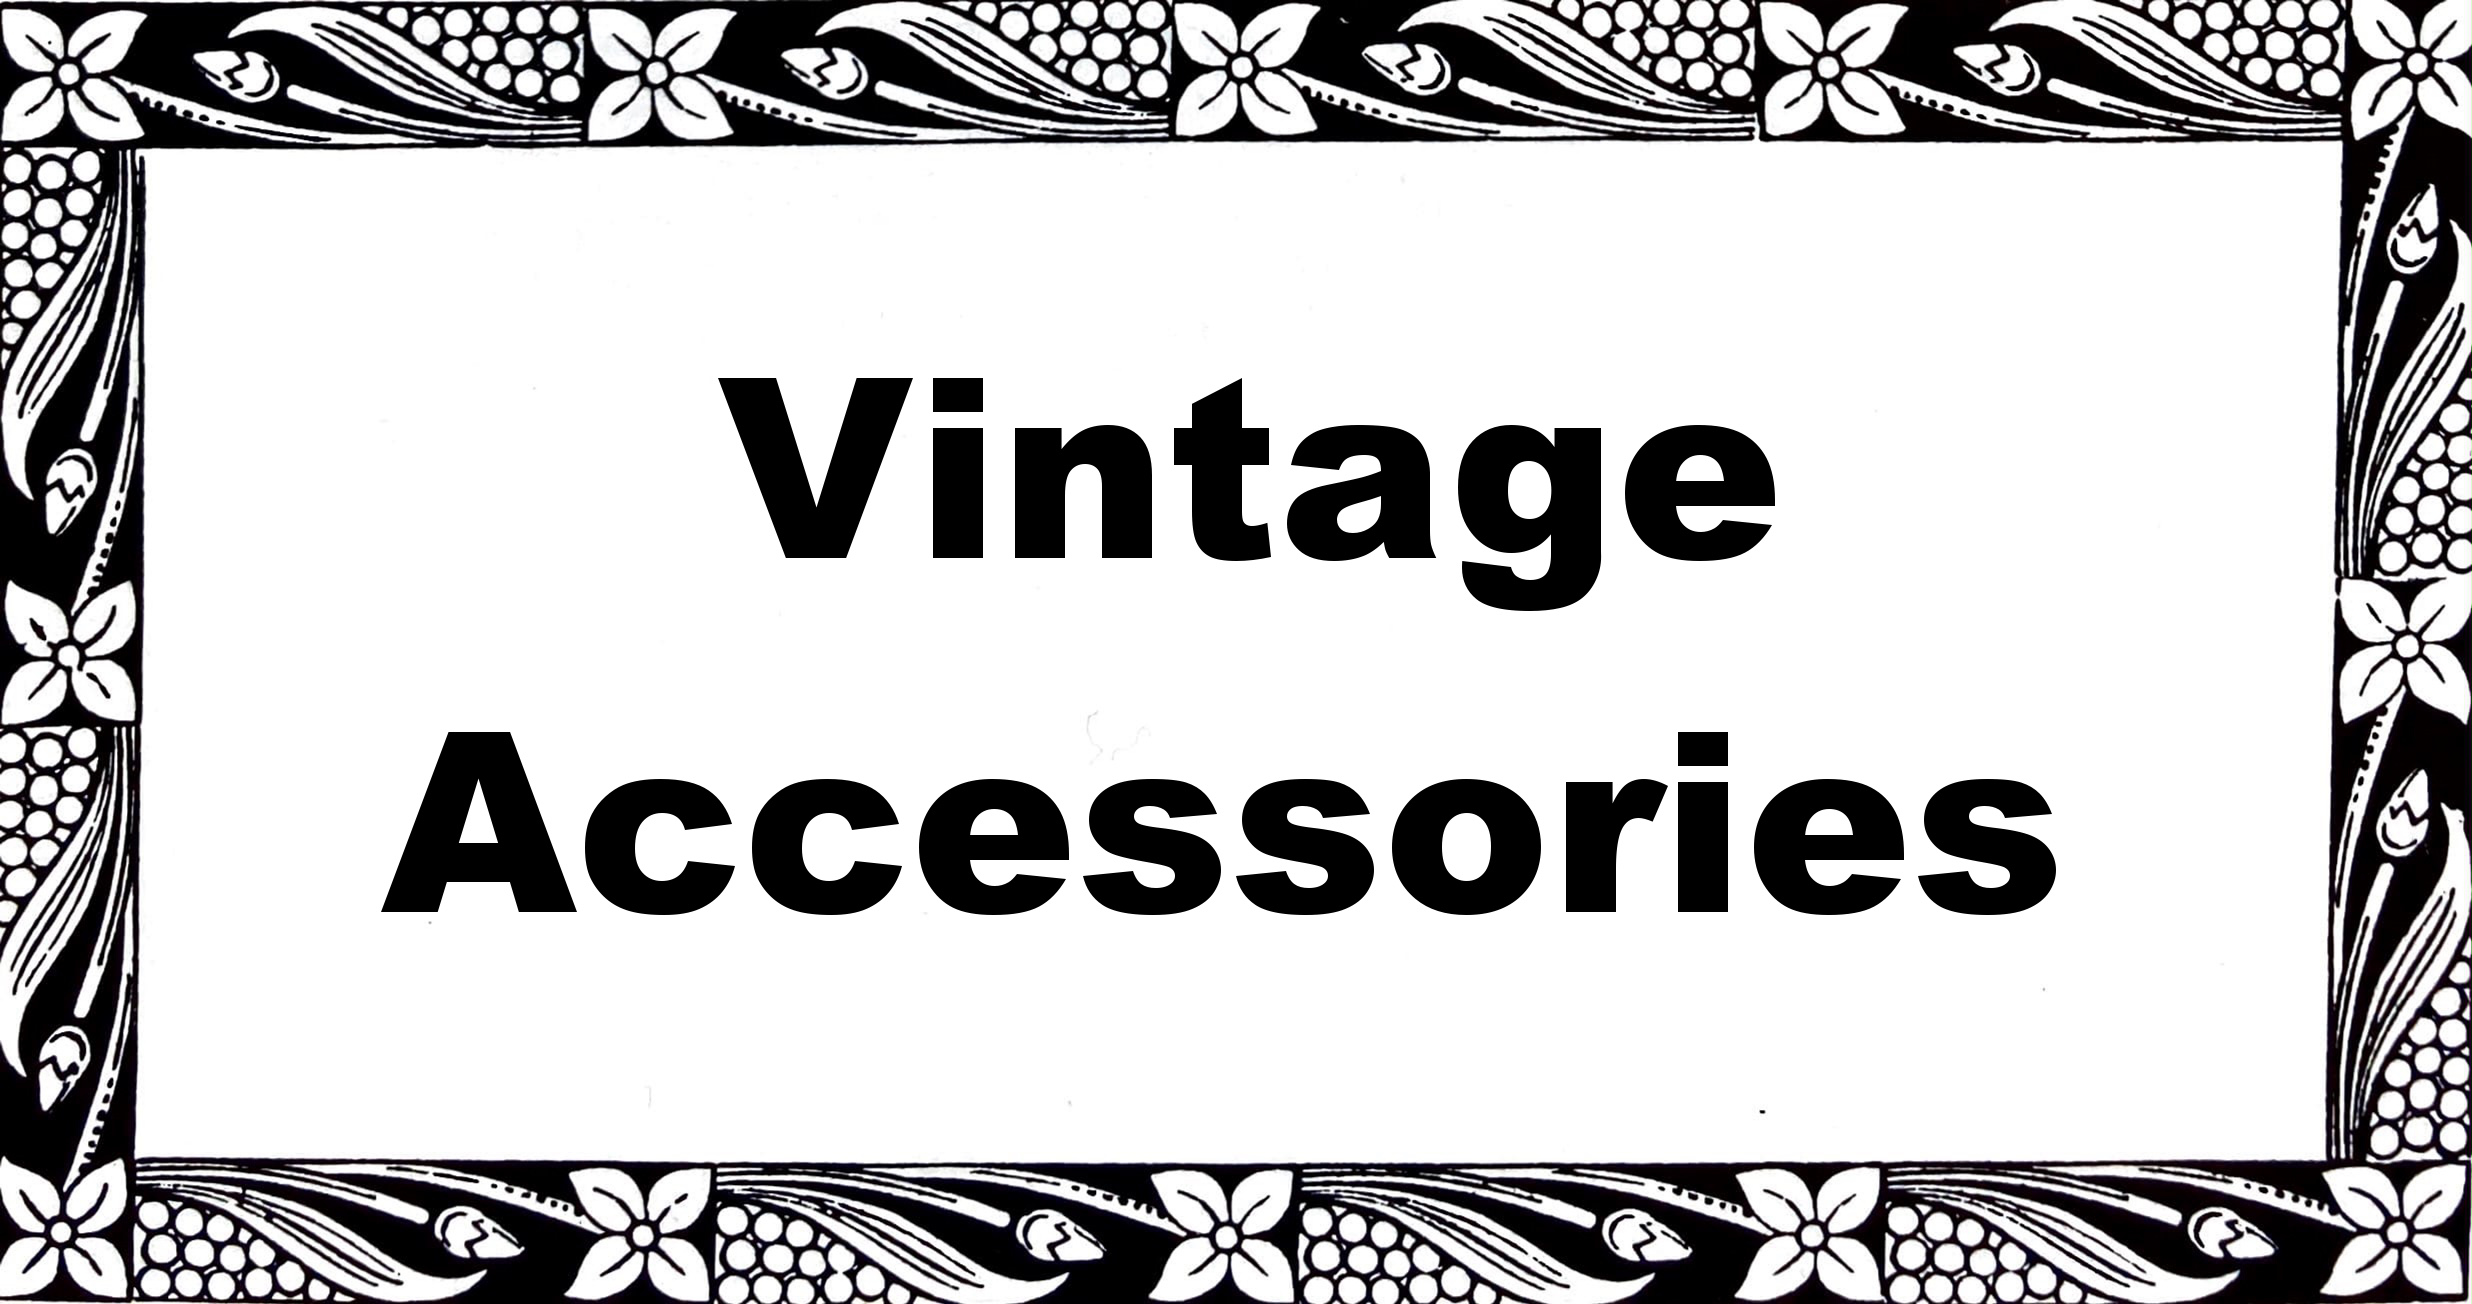 Vintage Accessories Heading